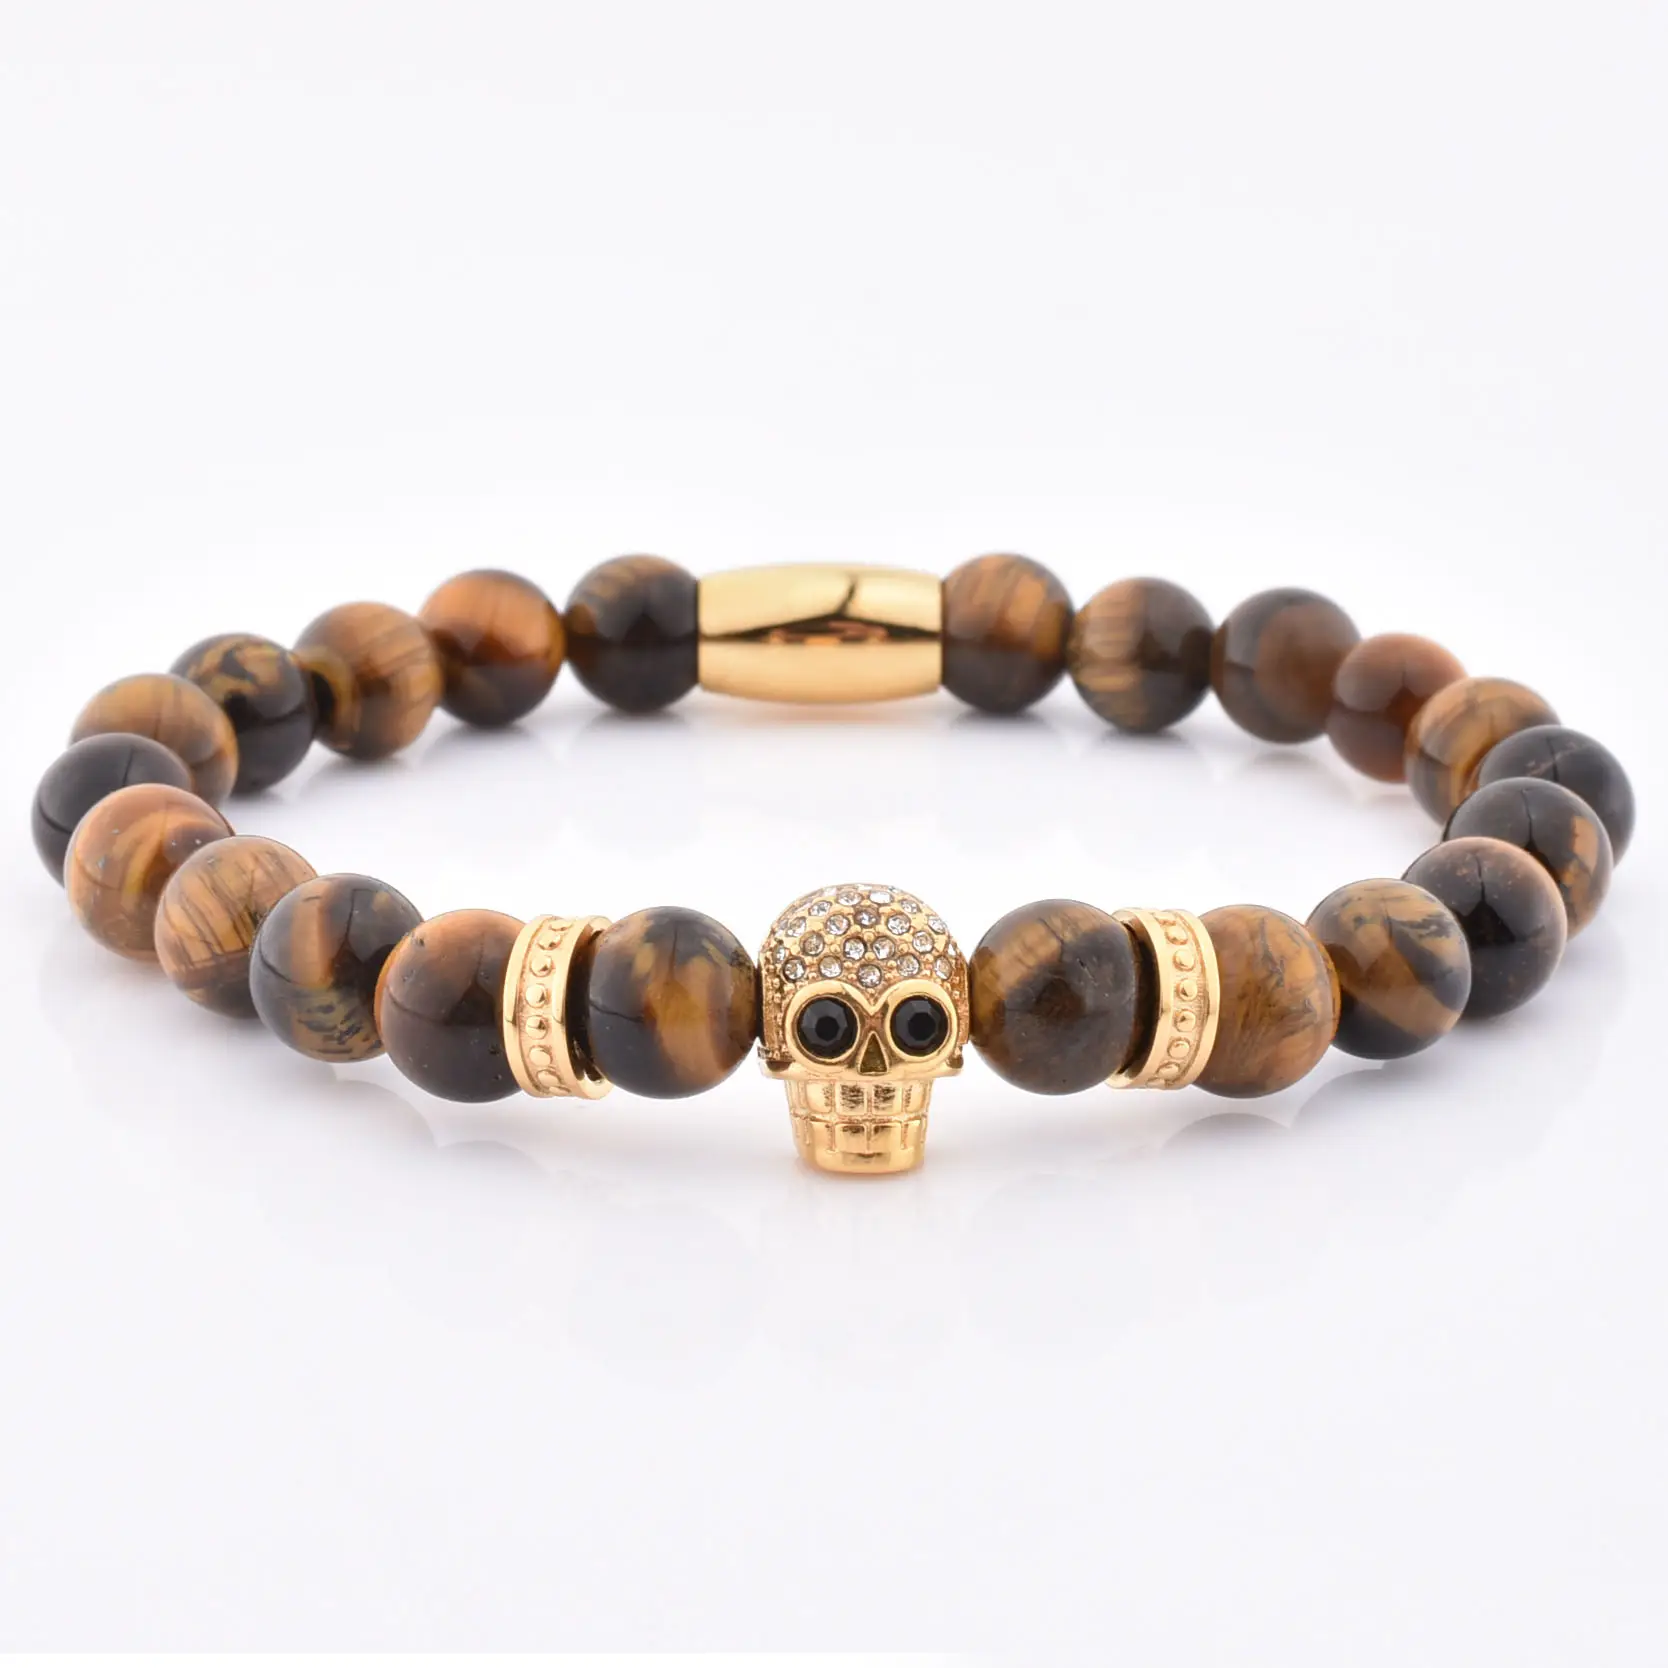 High Quality Tiger Eye Stone Beads Stainless Steel Skull Bead Bracelet With Diamond